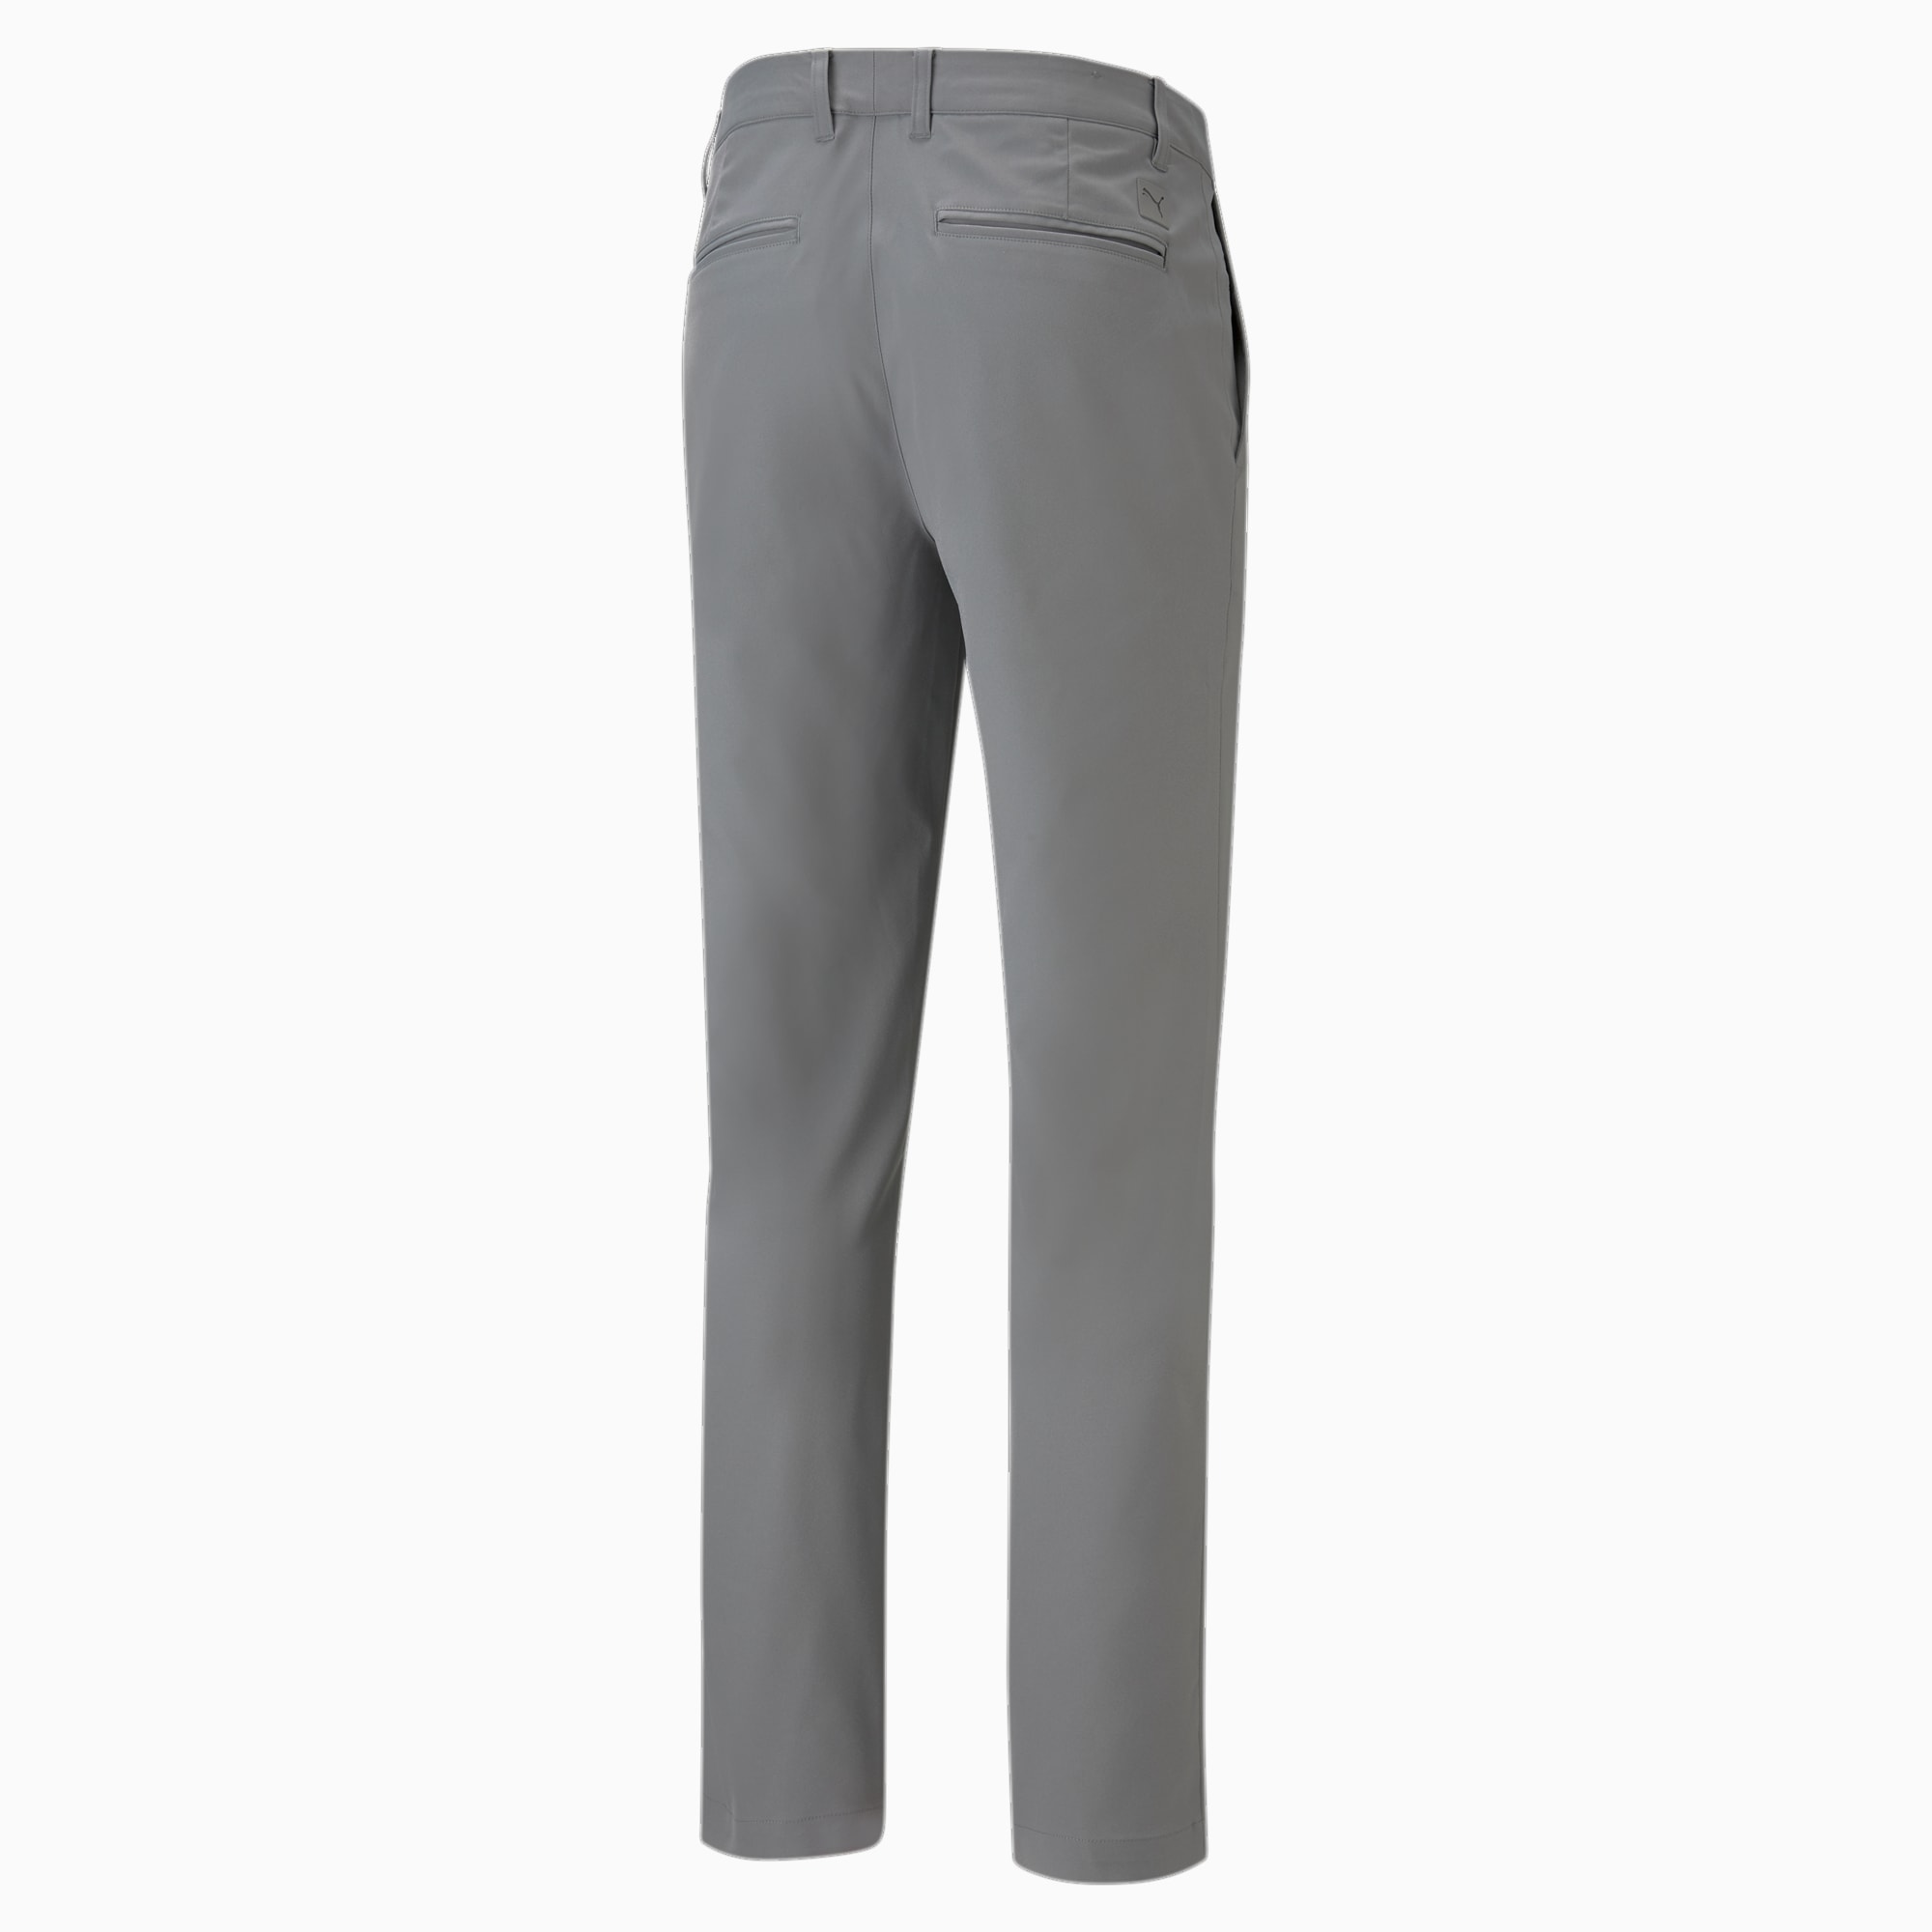 PUMA Dealer Tailored Golf Pants Men, Slate Sky, Size 40/30, Clothing